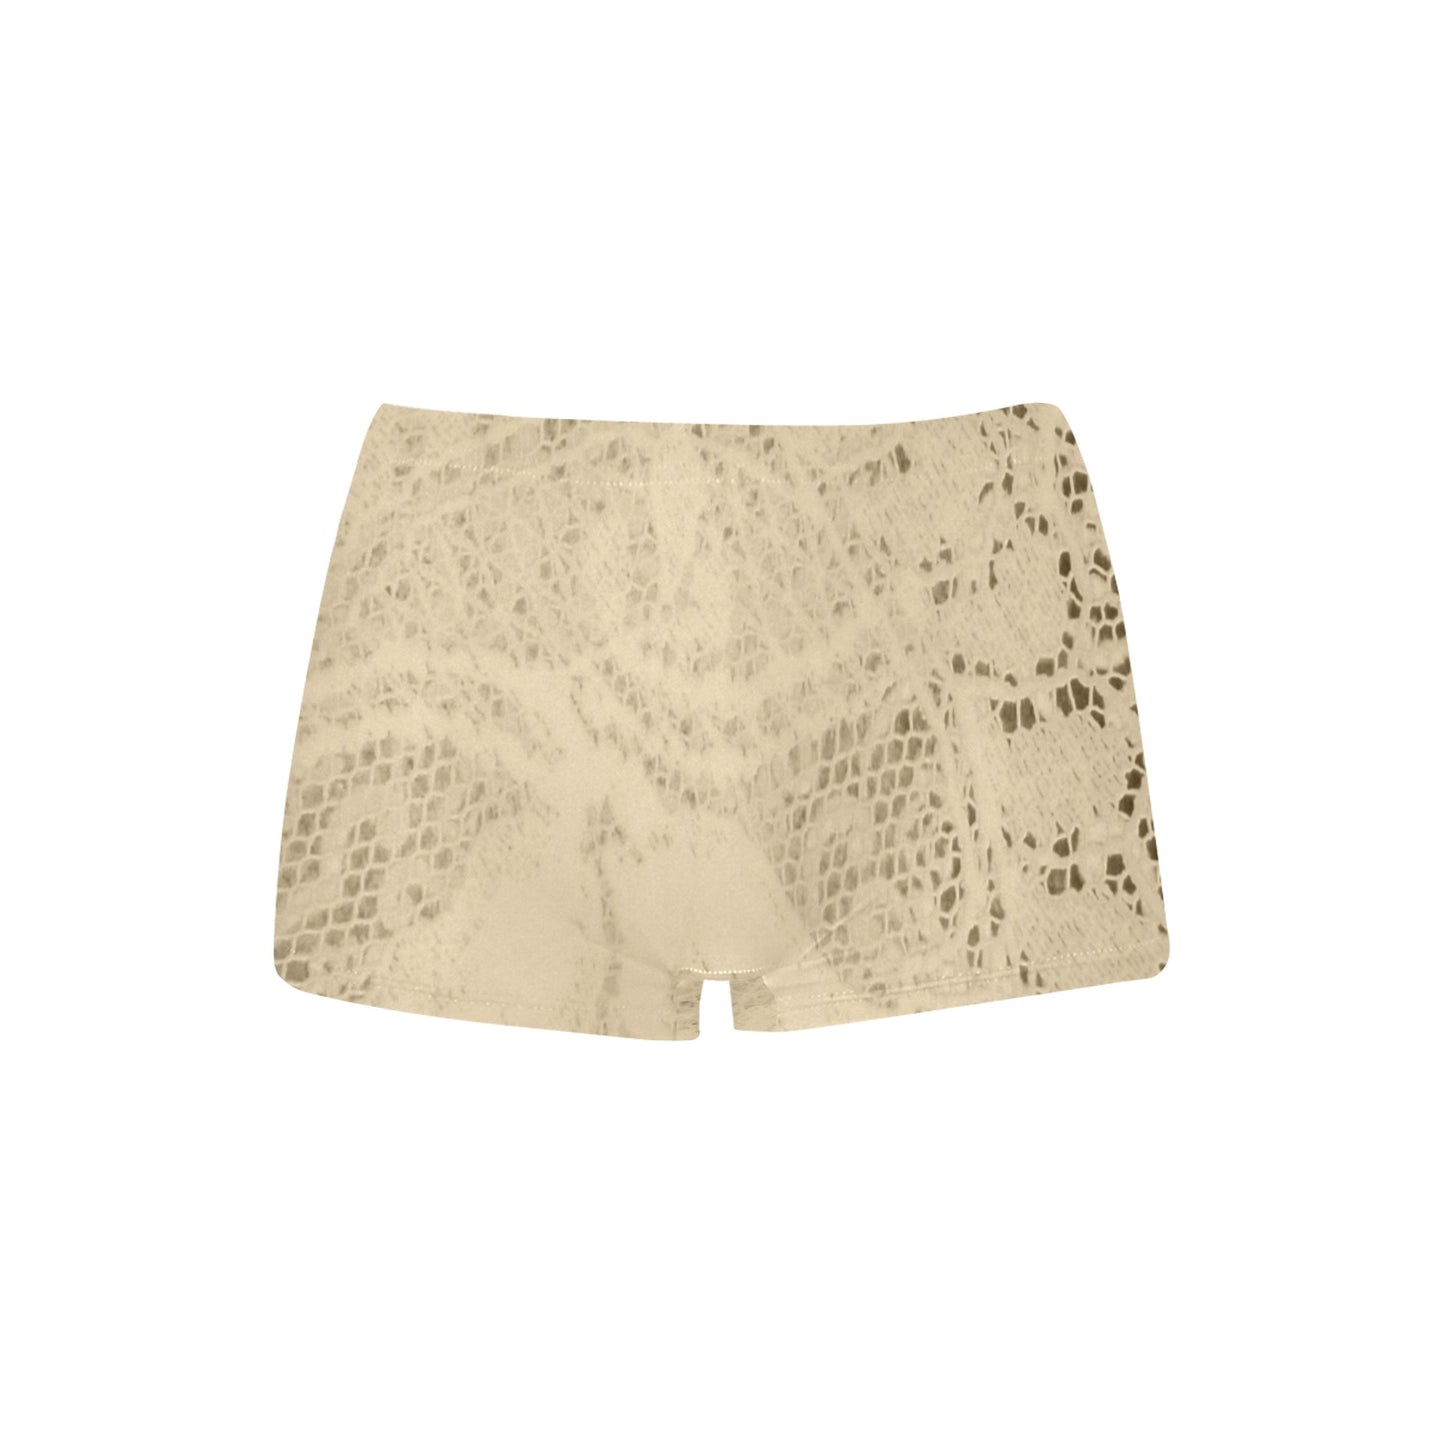 Printed Lace Boyshorts, daisy dukes, pum pum shorts, shortie shorts , design 26